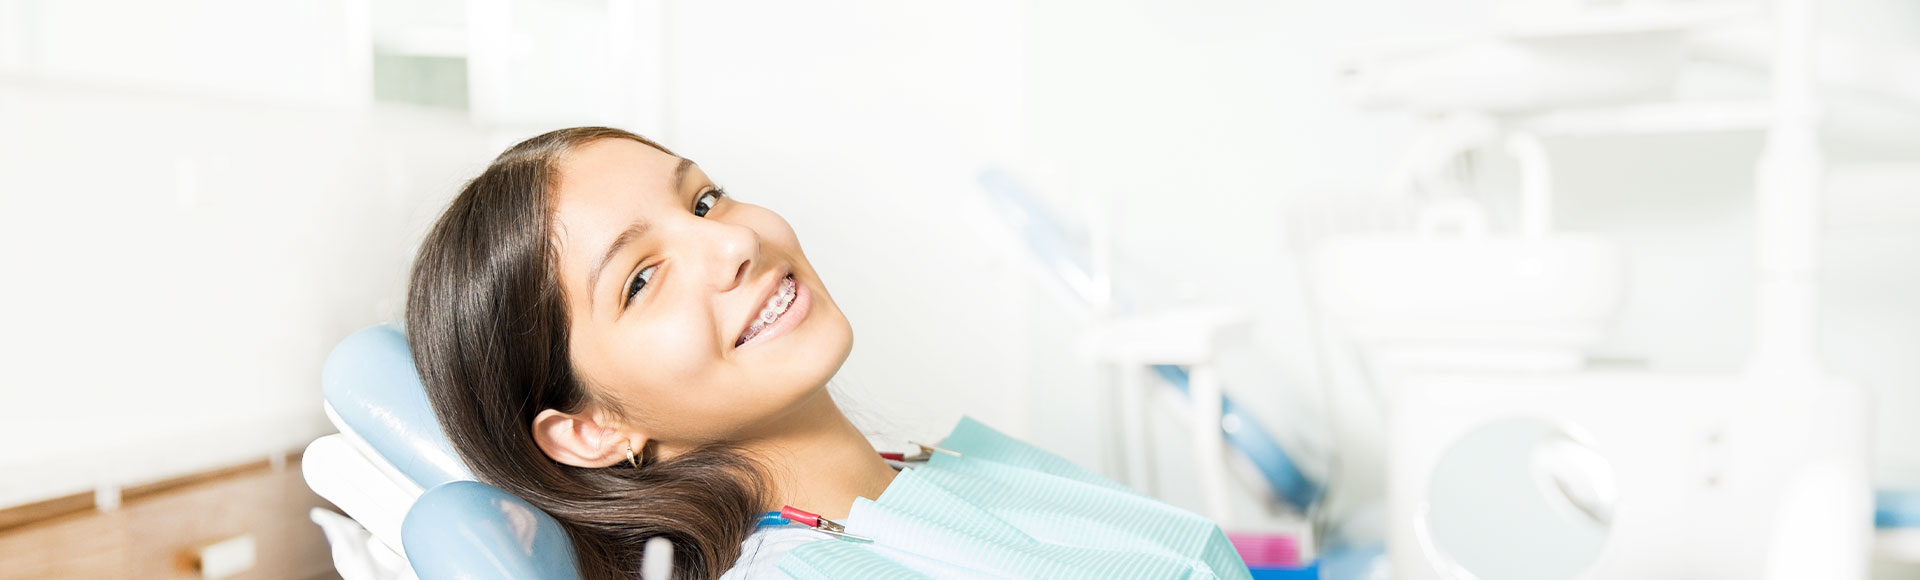 West Islip Orthodontics | Orthodontic Retainers, Two-Phase Treatment and Adult Orthodontics